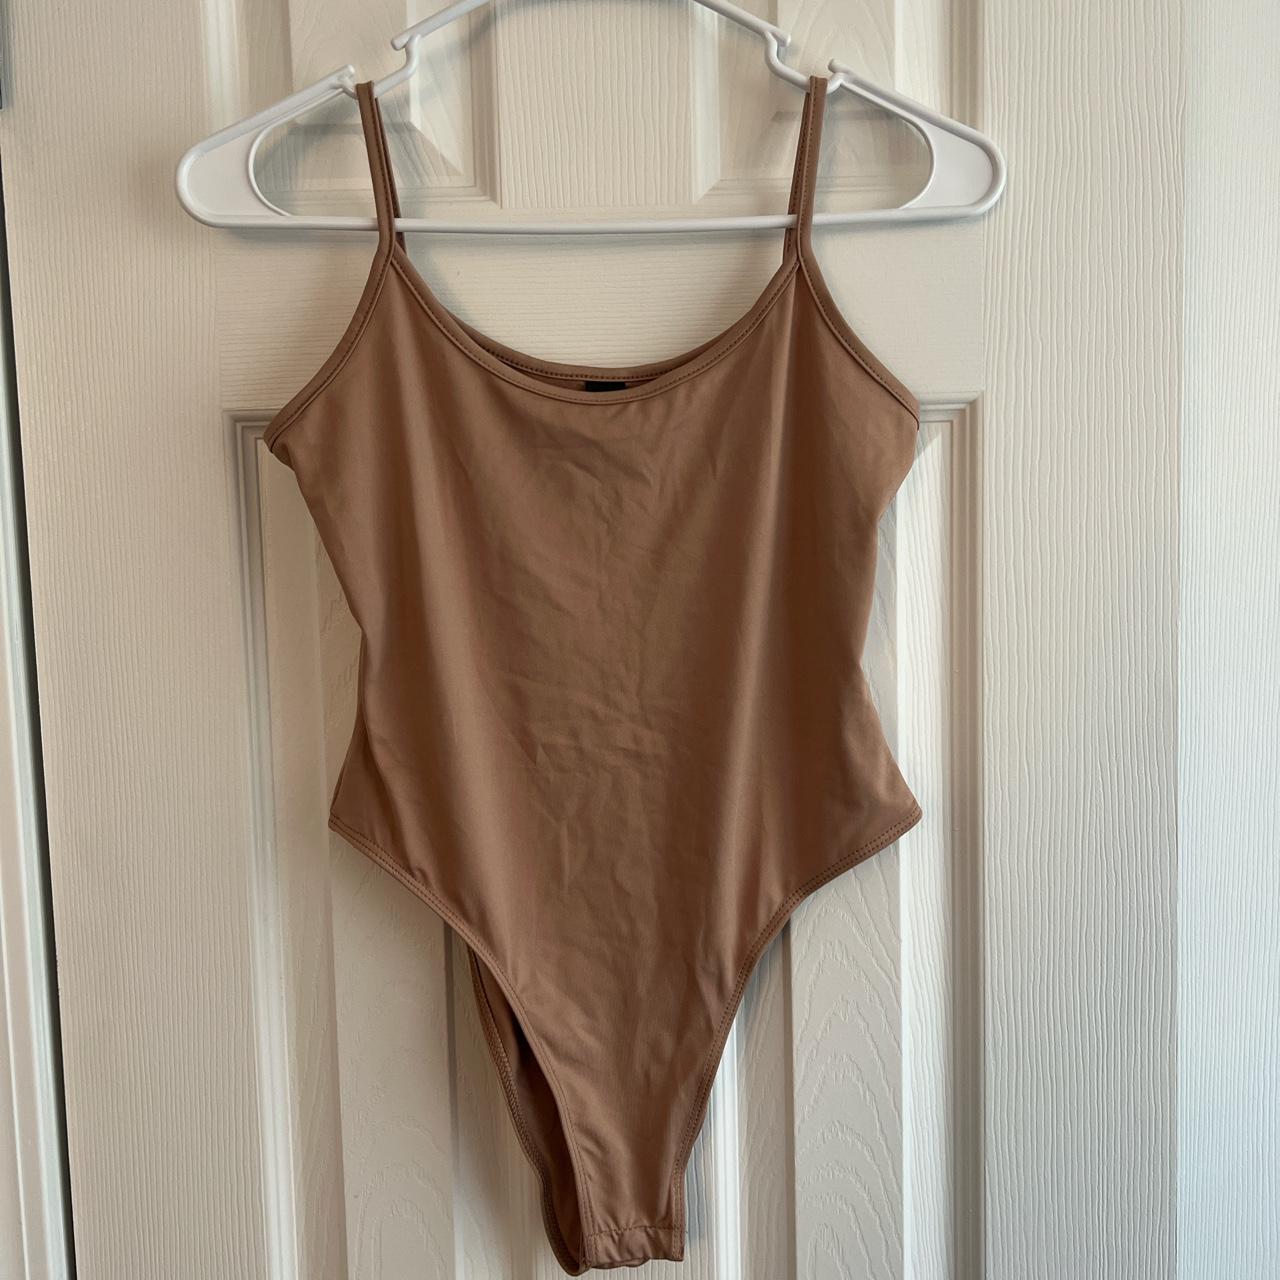 shein nude bodysuit plain nude bodysuit with three - Depop